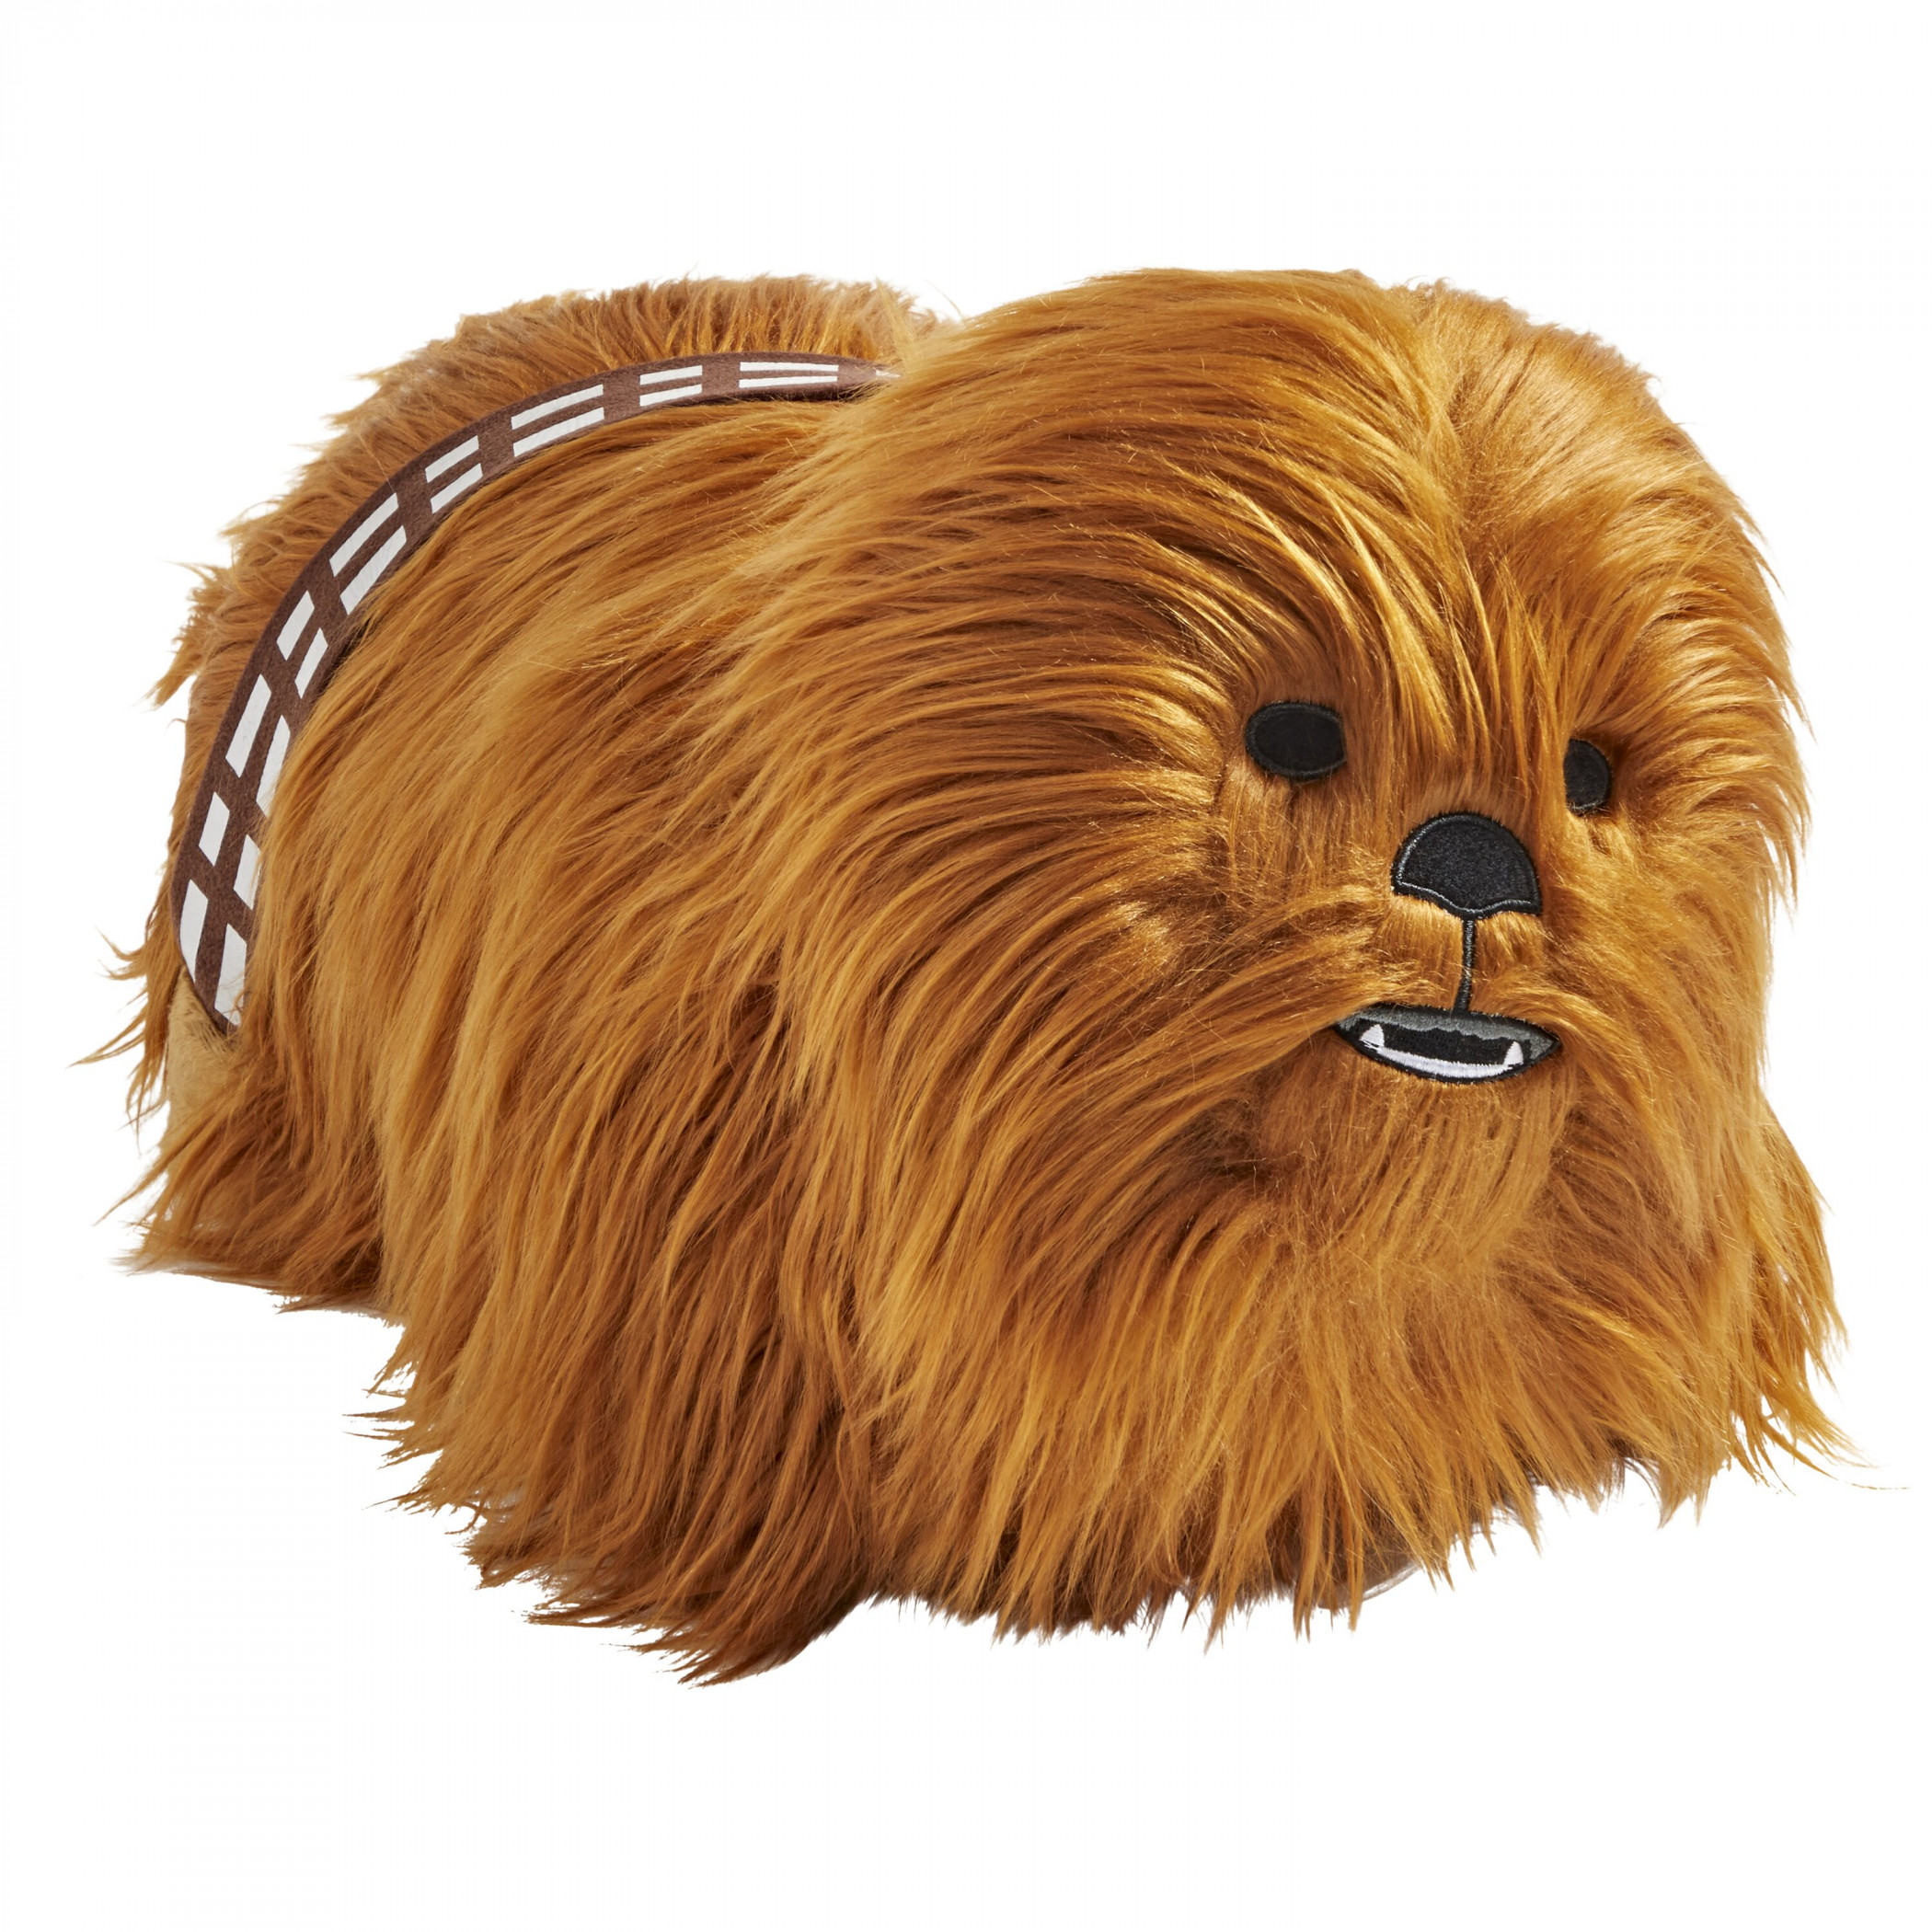 Chewy Pillow Pet - Star Wars Chewbacca Stuffed Animal Plush Toy